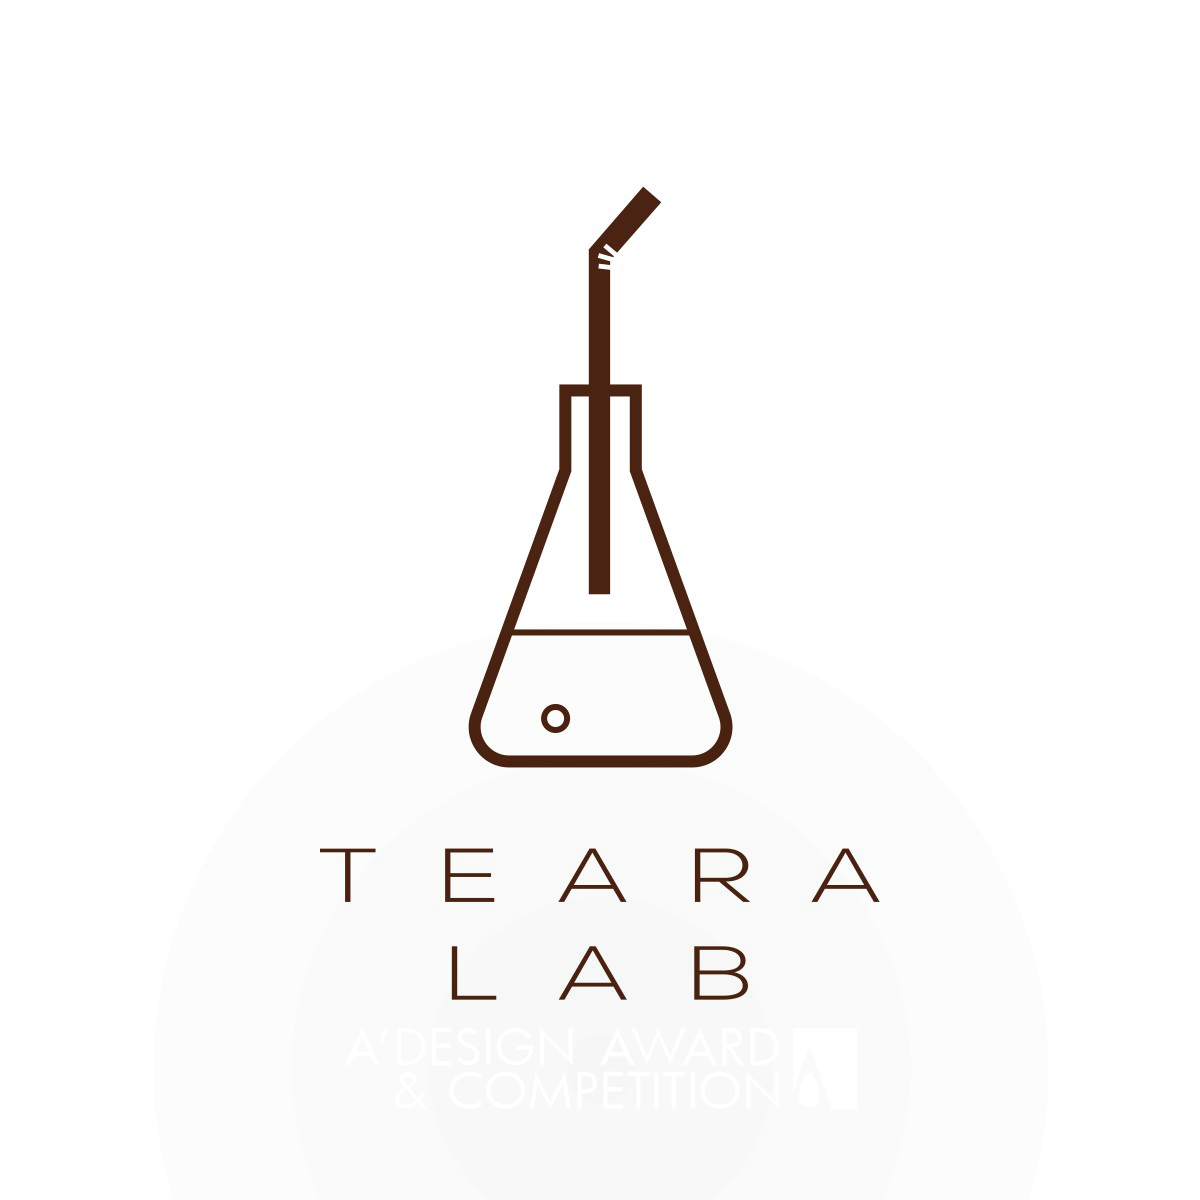 Tearalab logo design